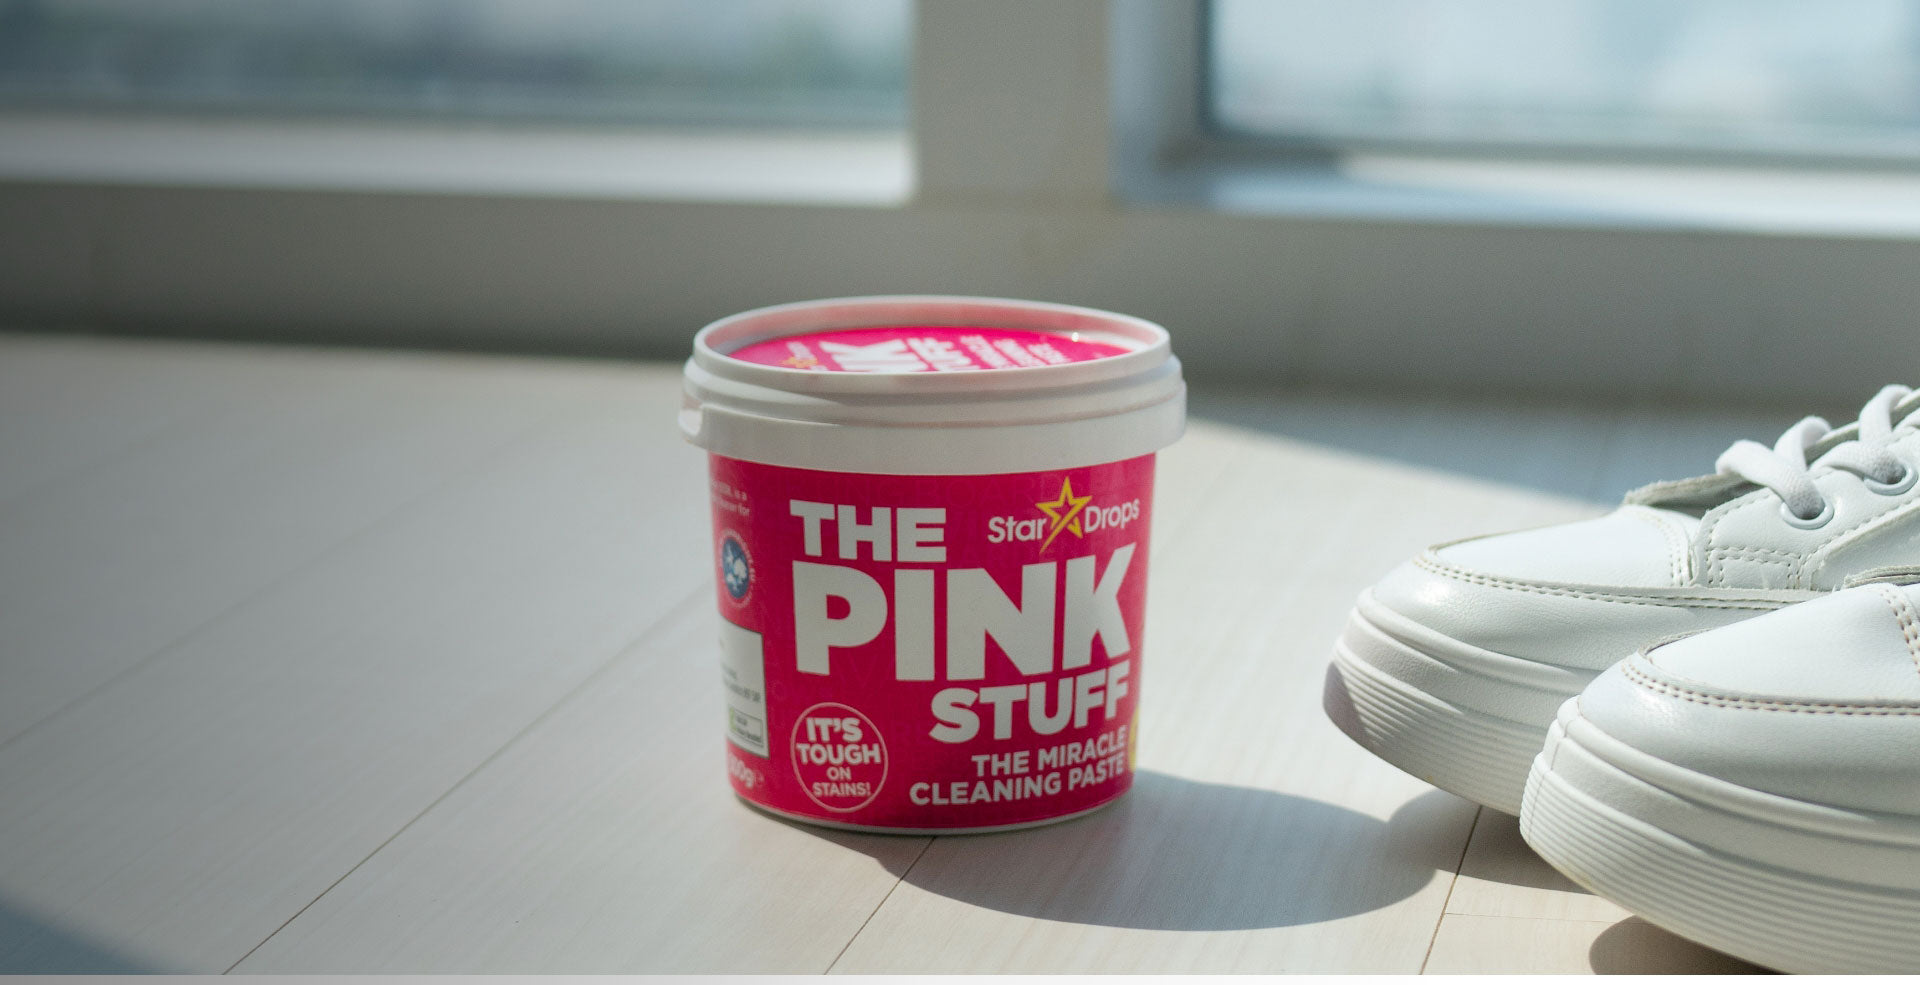 HAR LONDON FASHION Star Drops the Pink Stuff - Kit De Nettoyage